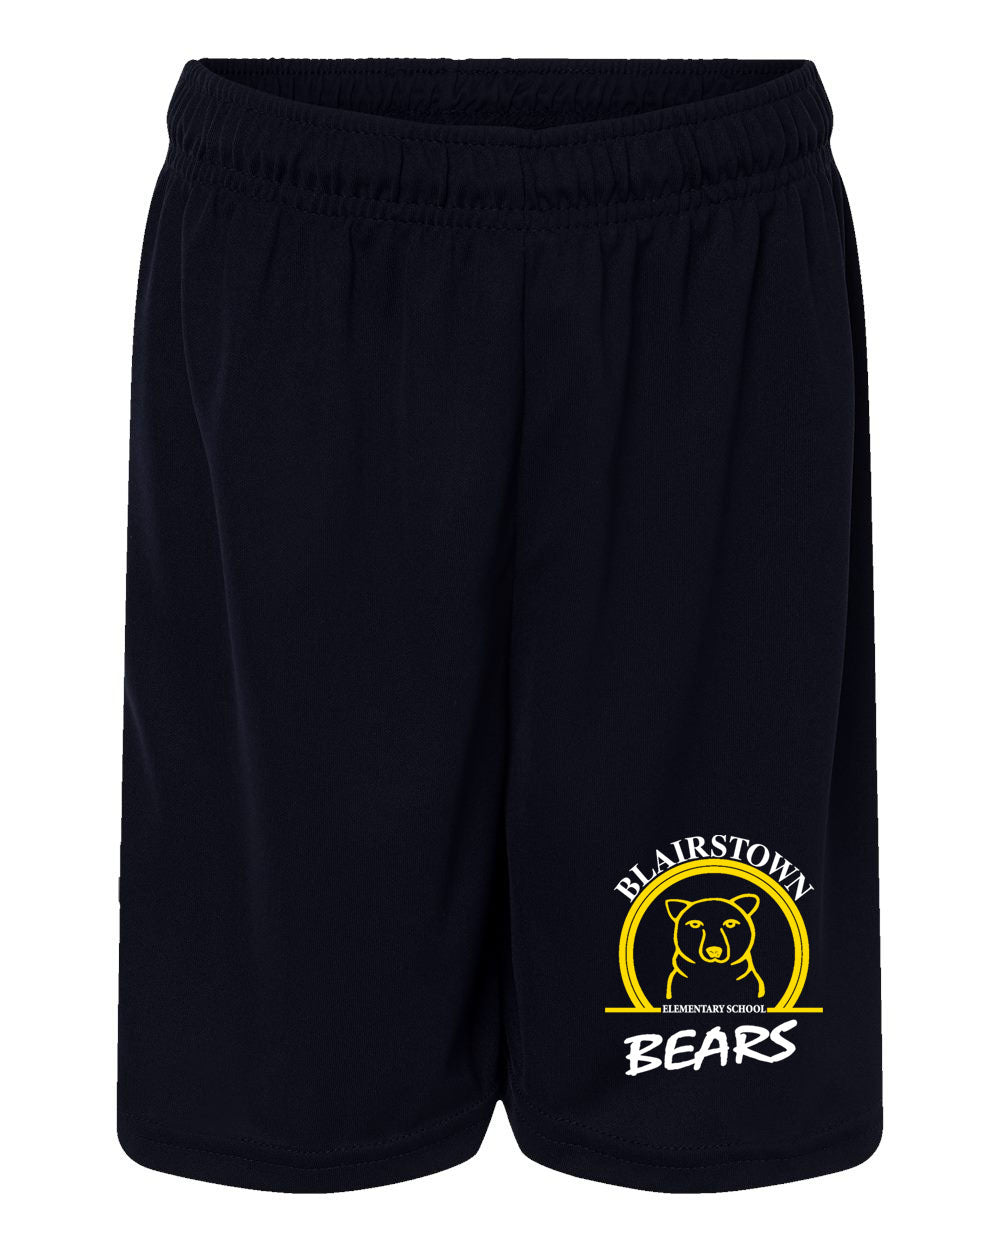 Blairstown Bears Design 5 Performance Shorts